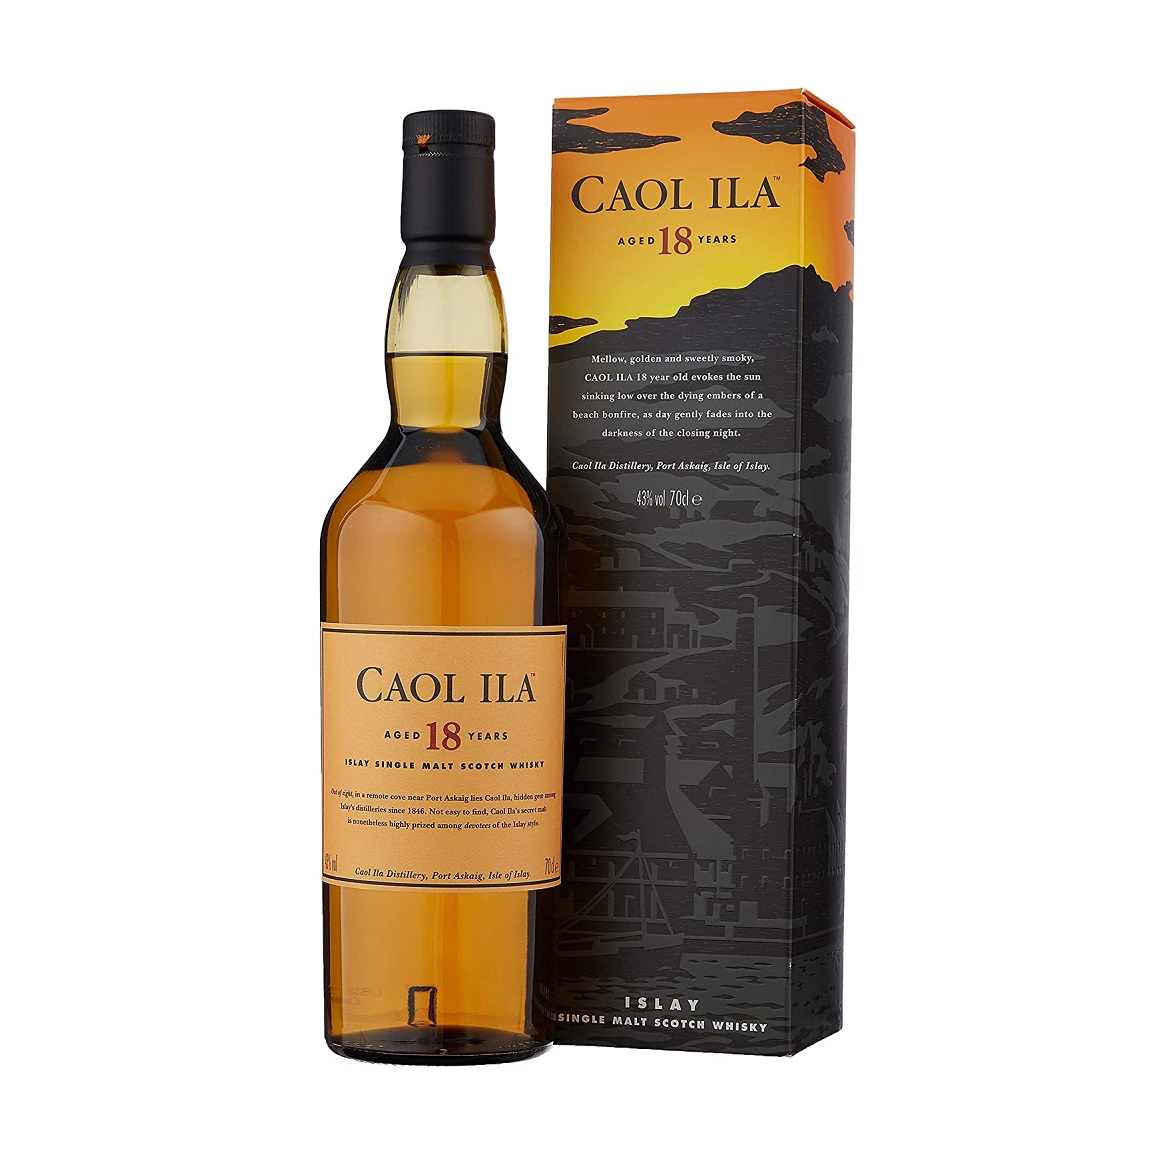 Caol Ila 18 Year Old Single Malt Scotch Whisky The Whisky List 6715